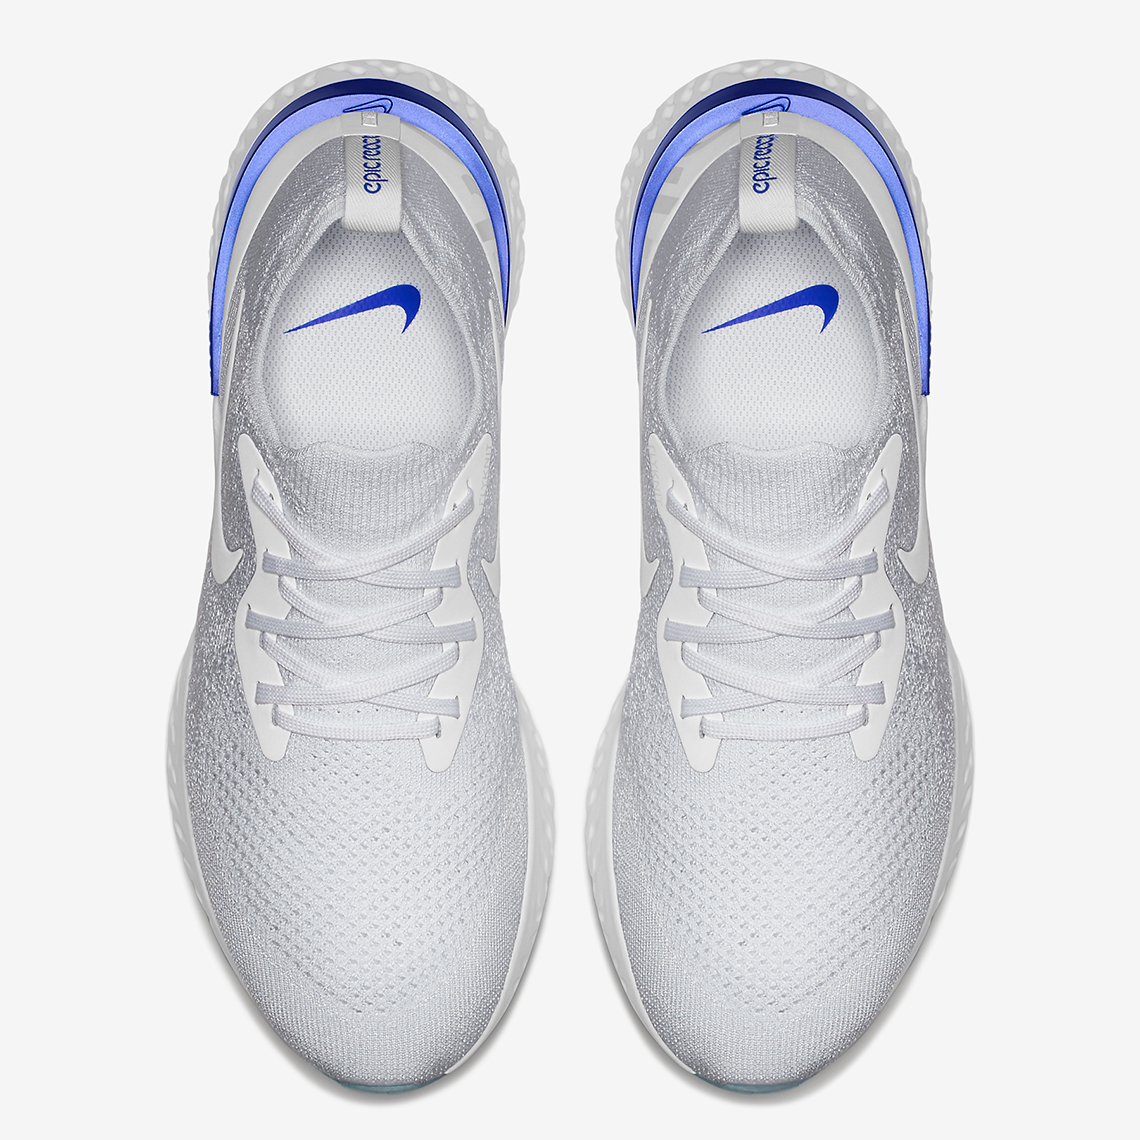 Nike Epic React White Blue Aq0067 100 6